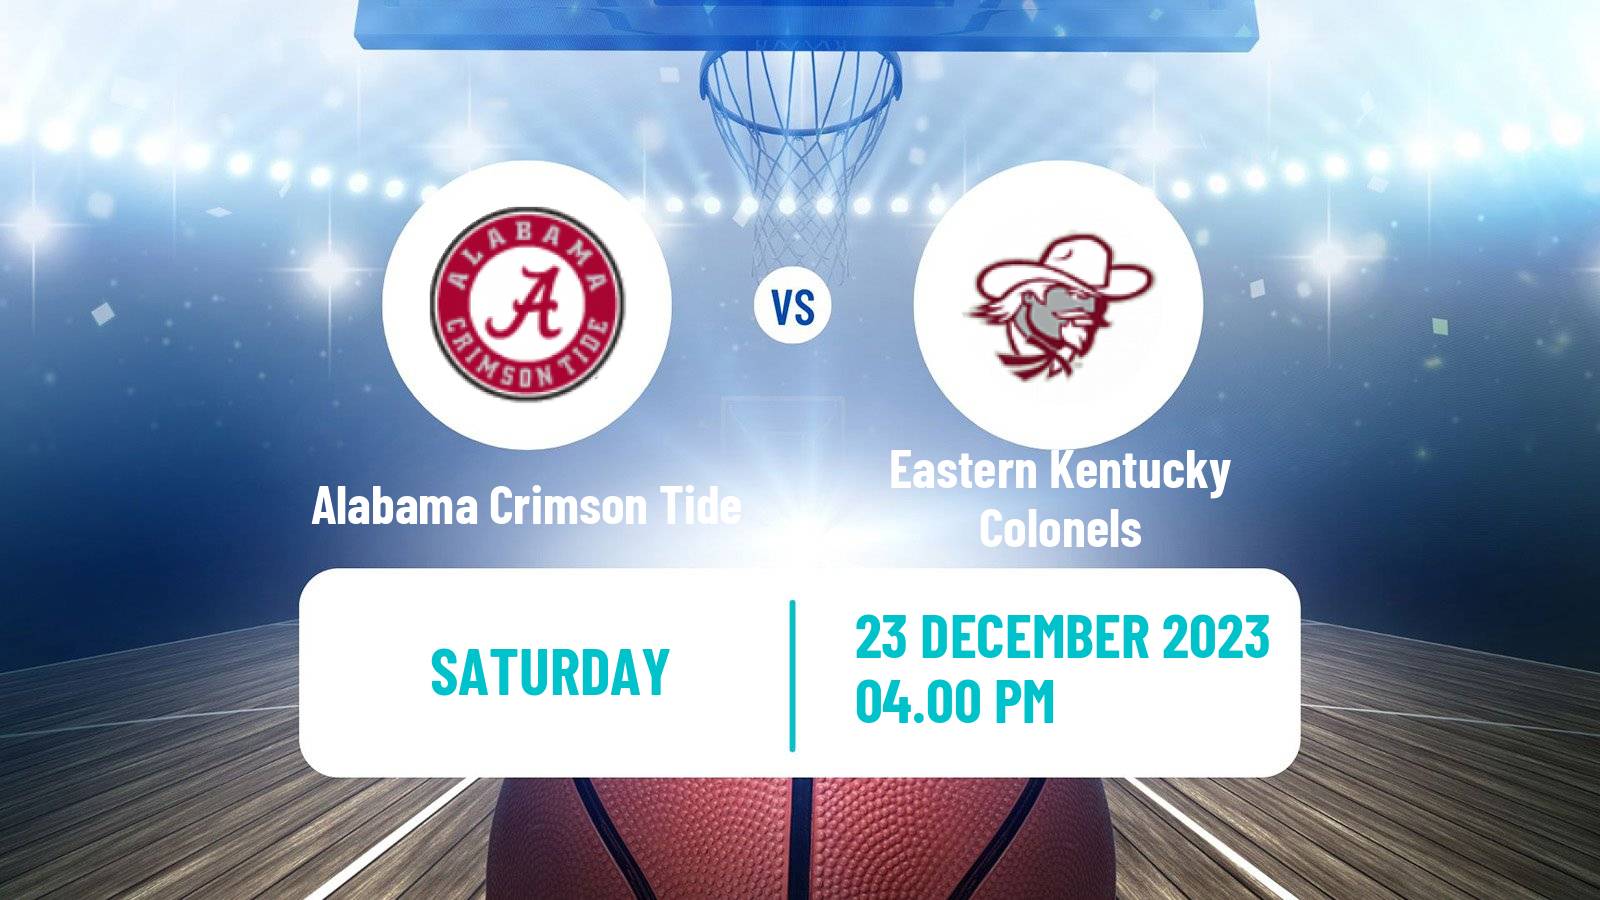 Basketball NCAA College Basketball Alabama Crimson Tide - Eastern Kentucky Colonels